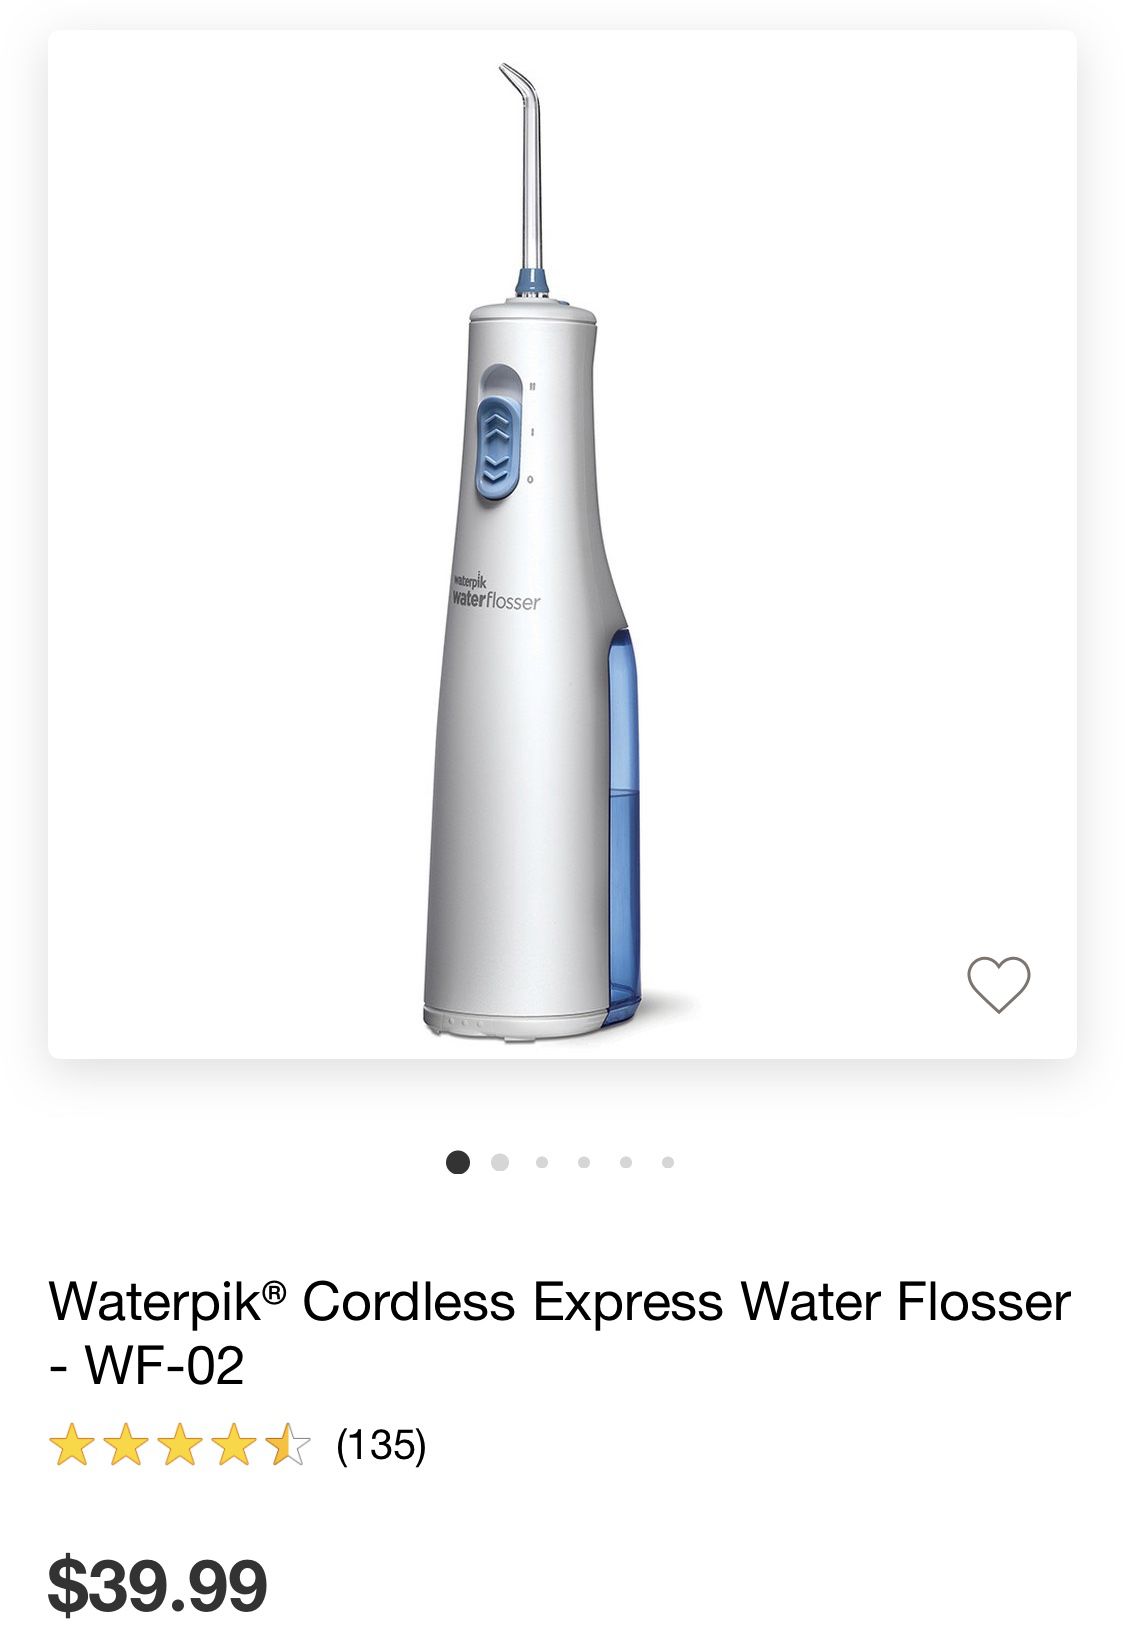 Waterpik cordless water flosser